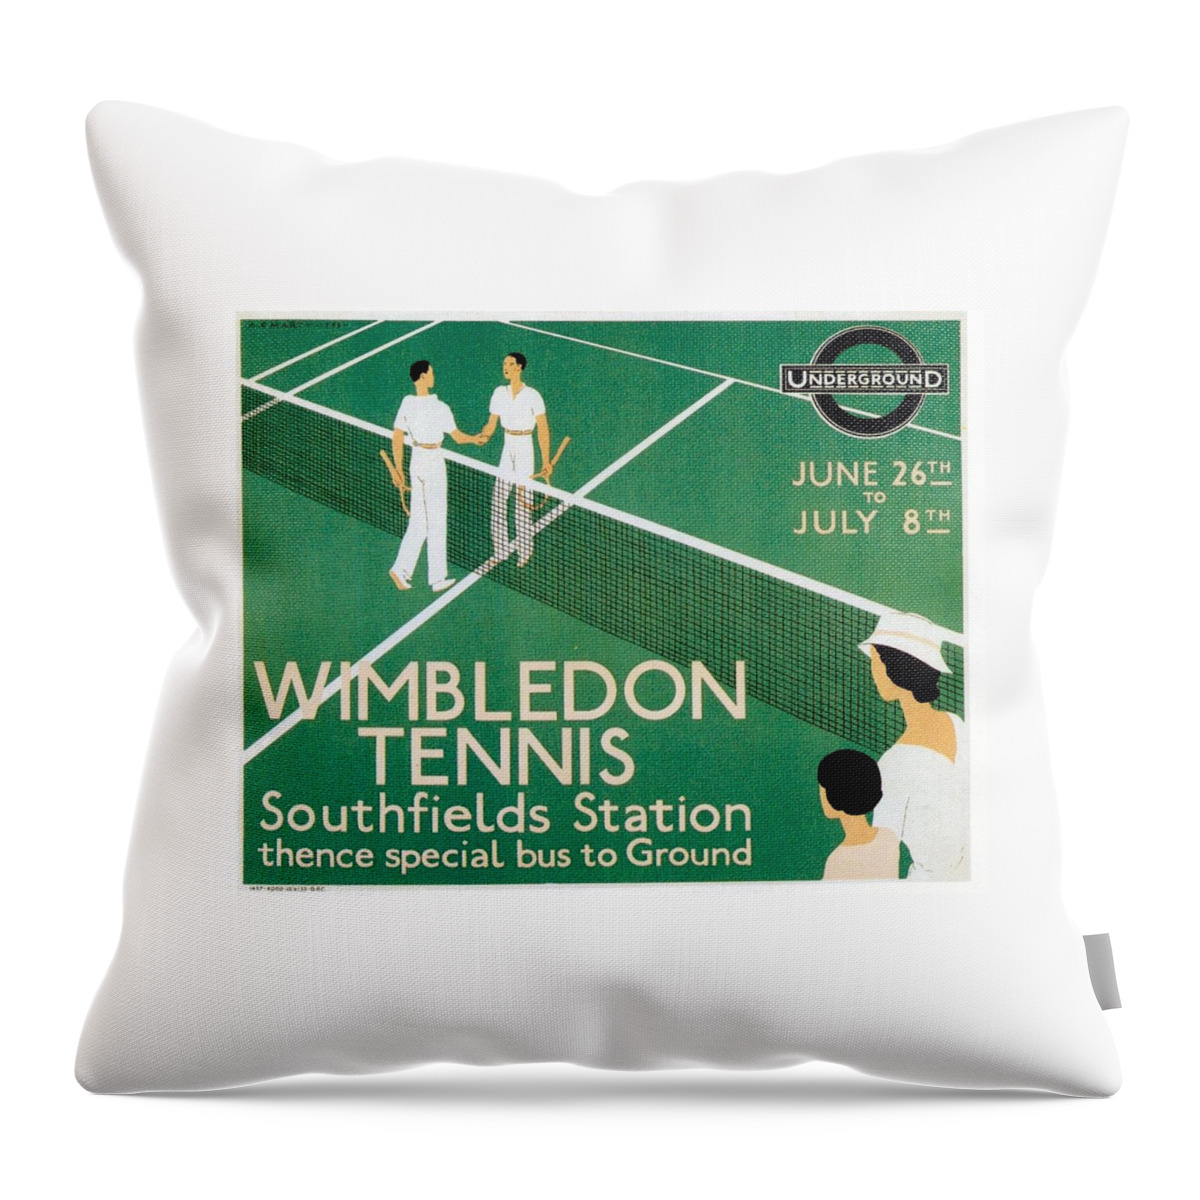 Wimbledon Throw Pillow featuring the mixed media Wimbledon Tennis Southfield Station - London Underground - Retro travel Poster - Vintage Poster by Studio Grafiikka